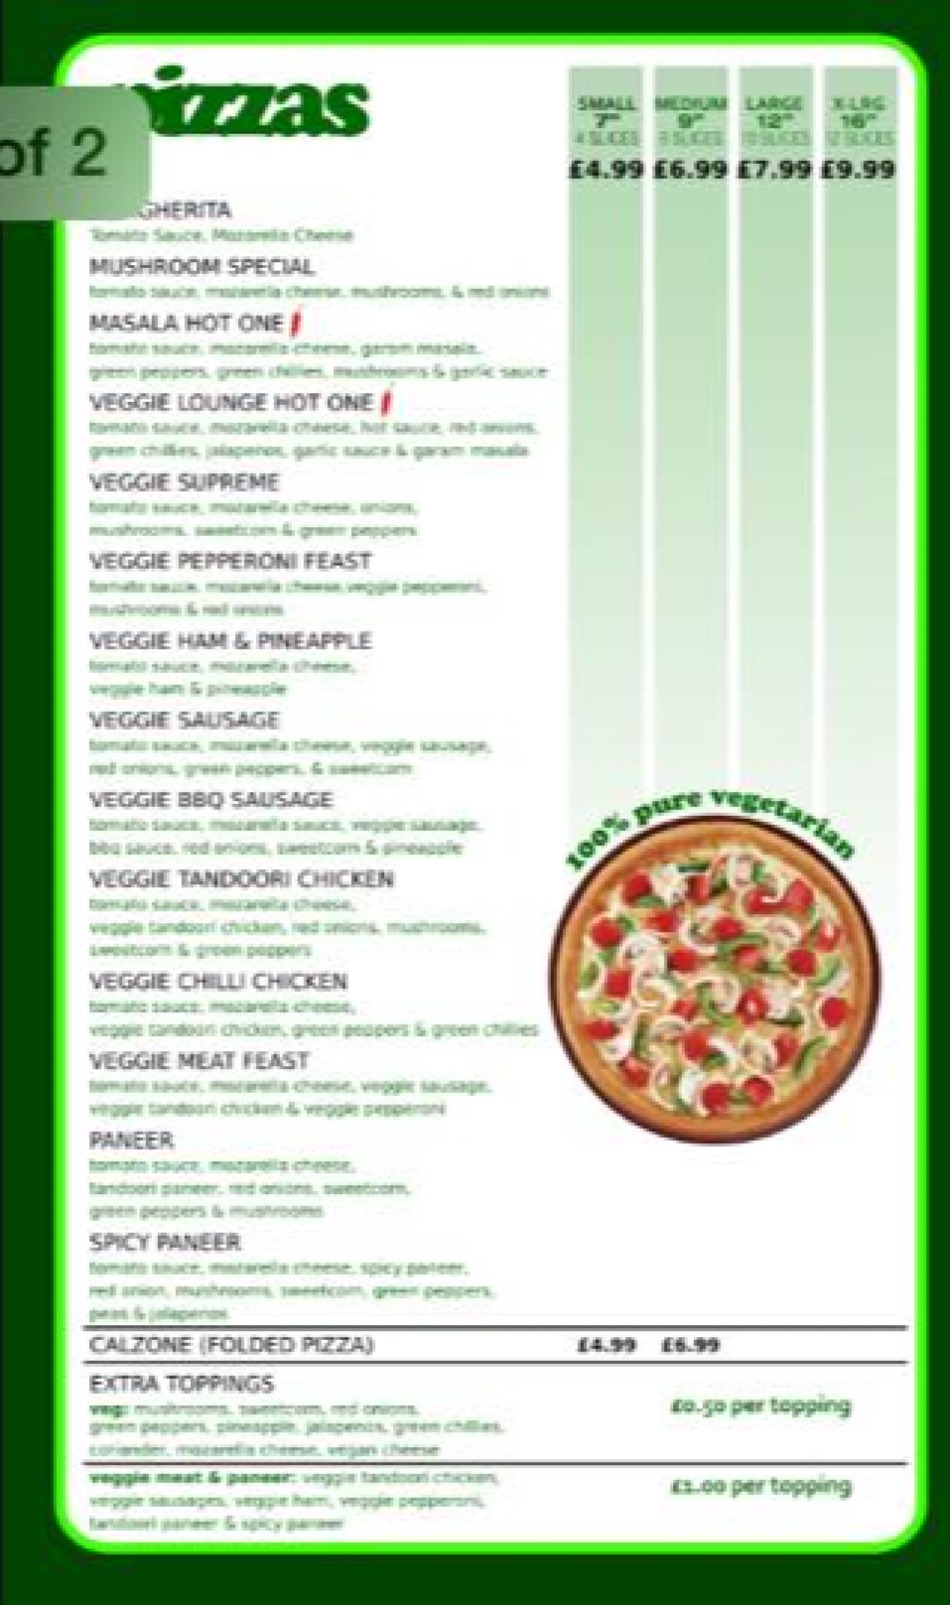 Takeaway Restaurant Menu Page - Veggie Lounge Pizza Takeaways Wolverhampton - Wolverhampton